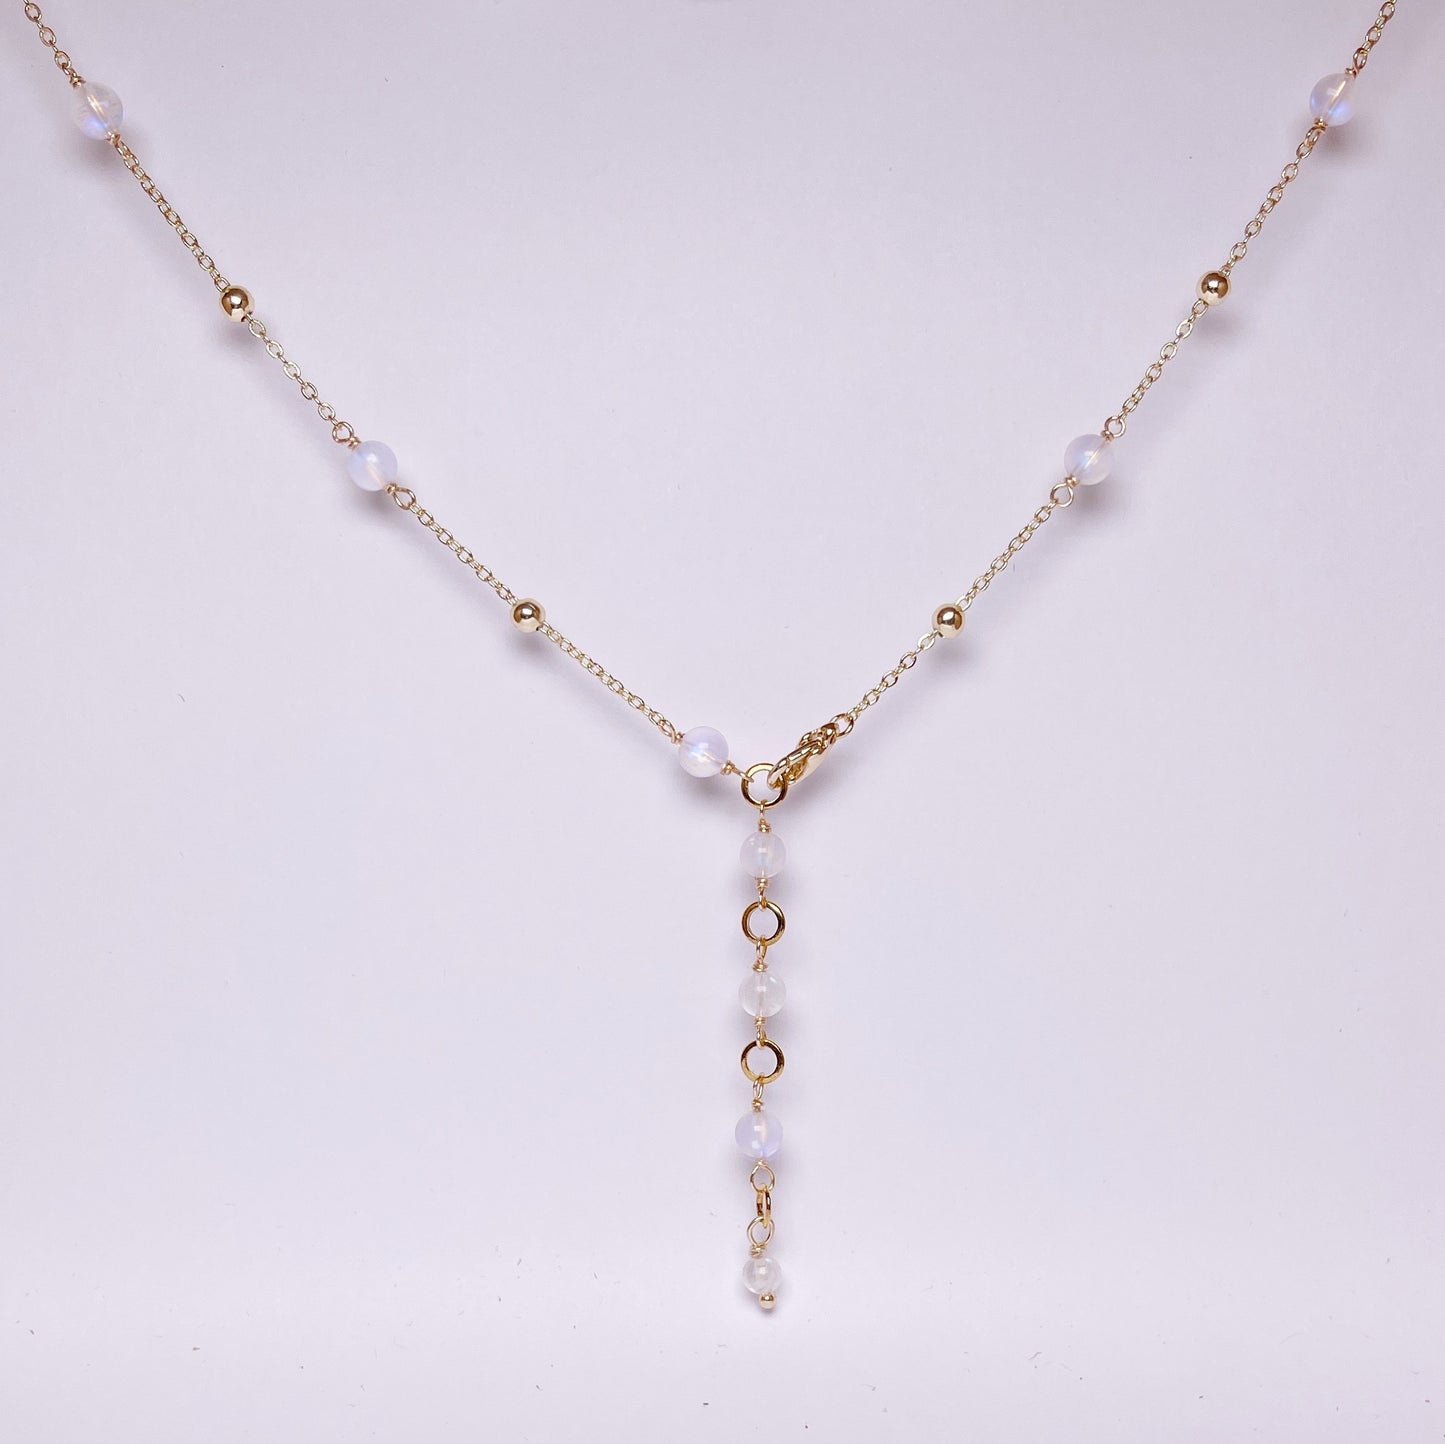 Moonstone fine link necklace